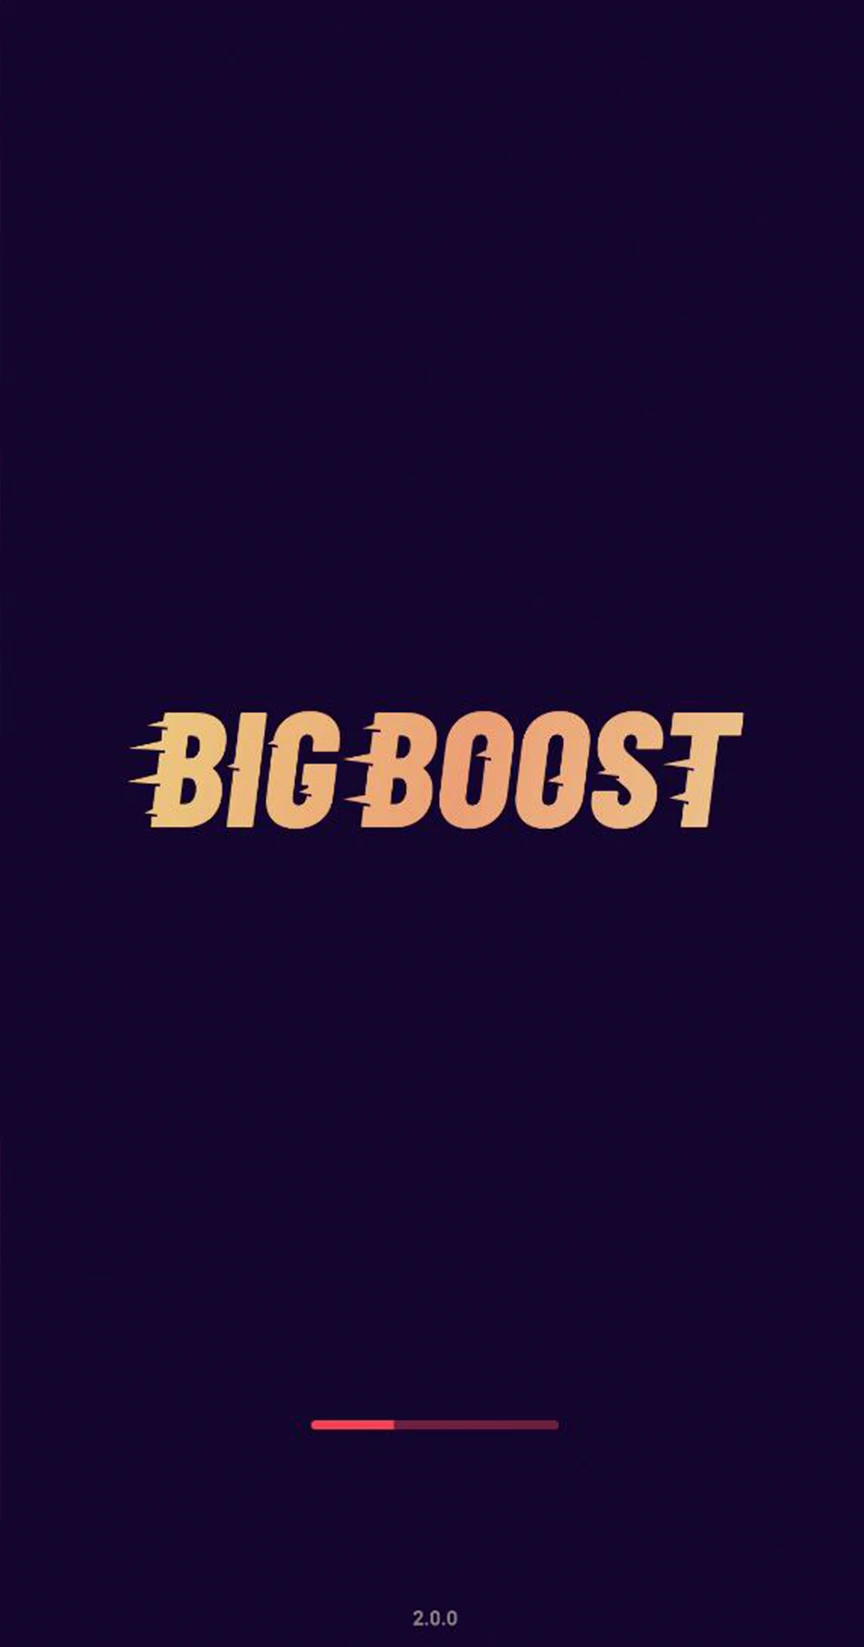 Install the Big Boost iOS app.